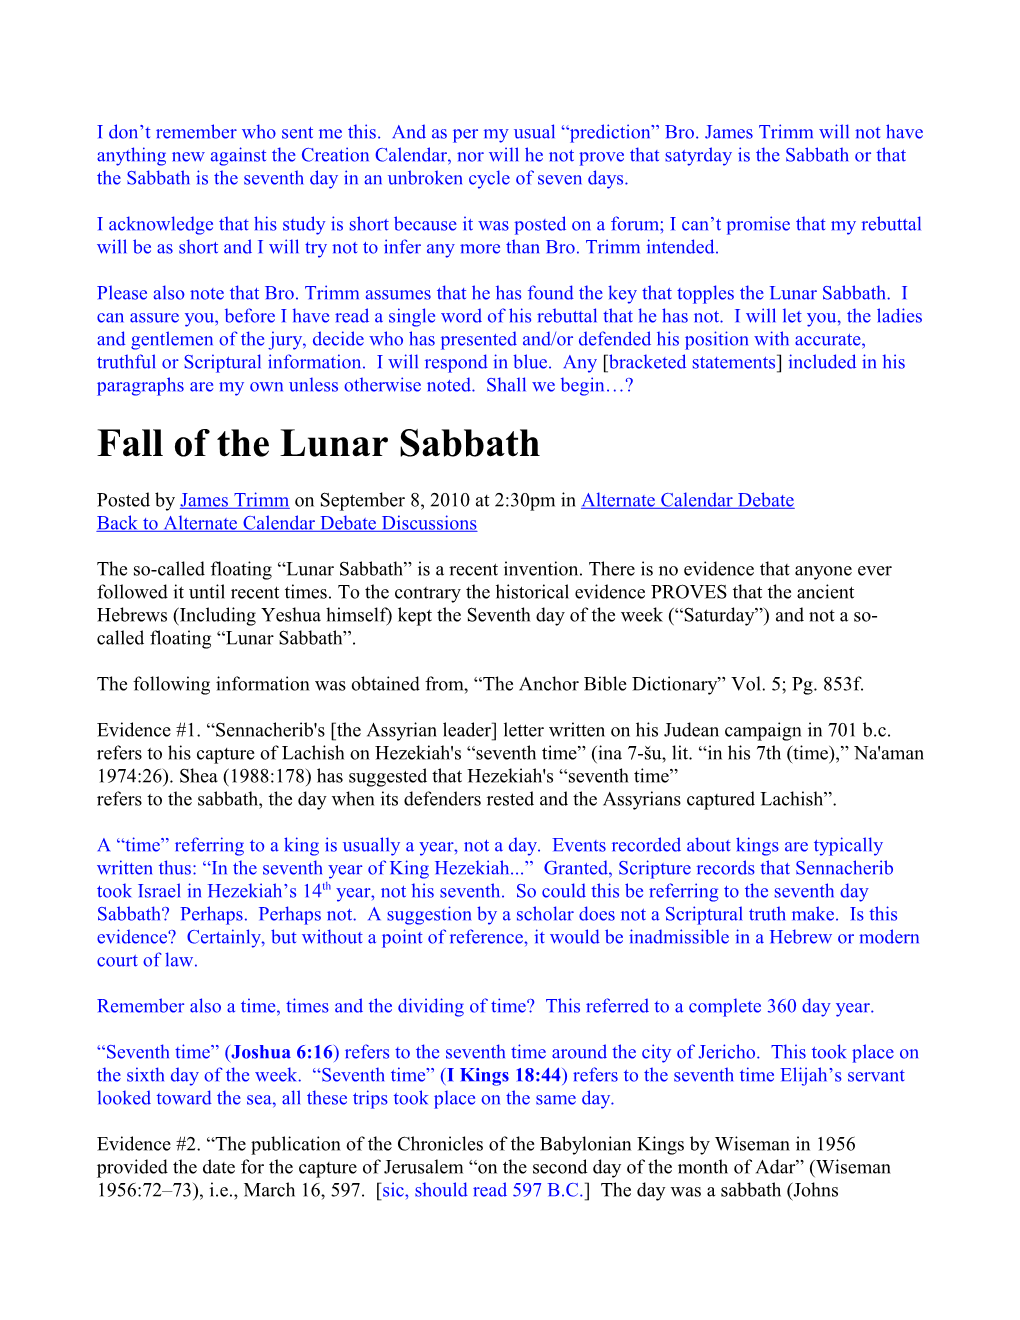 Fall of the Lunar Sabbath